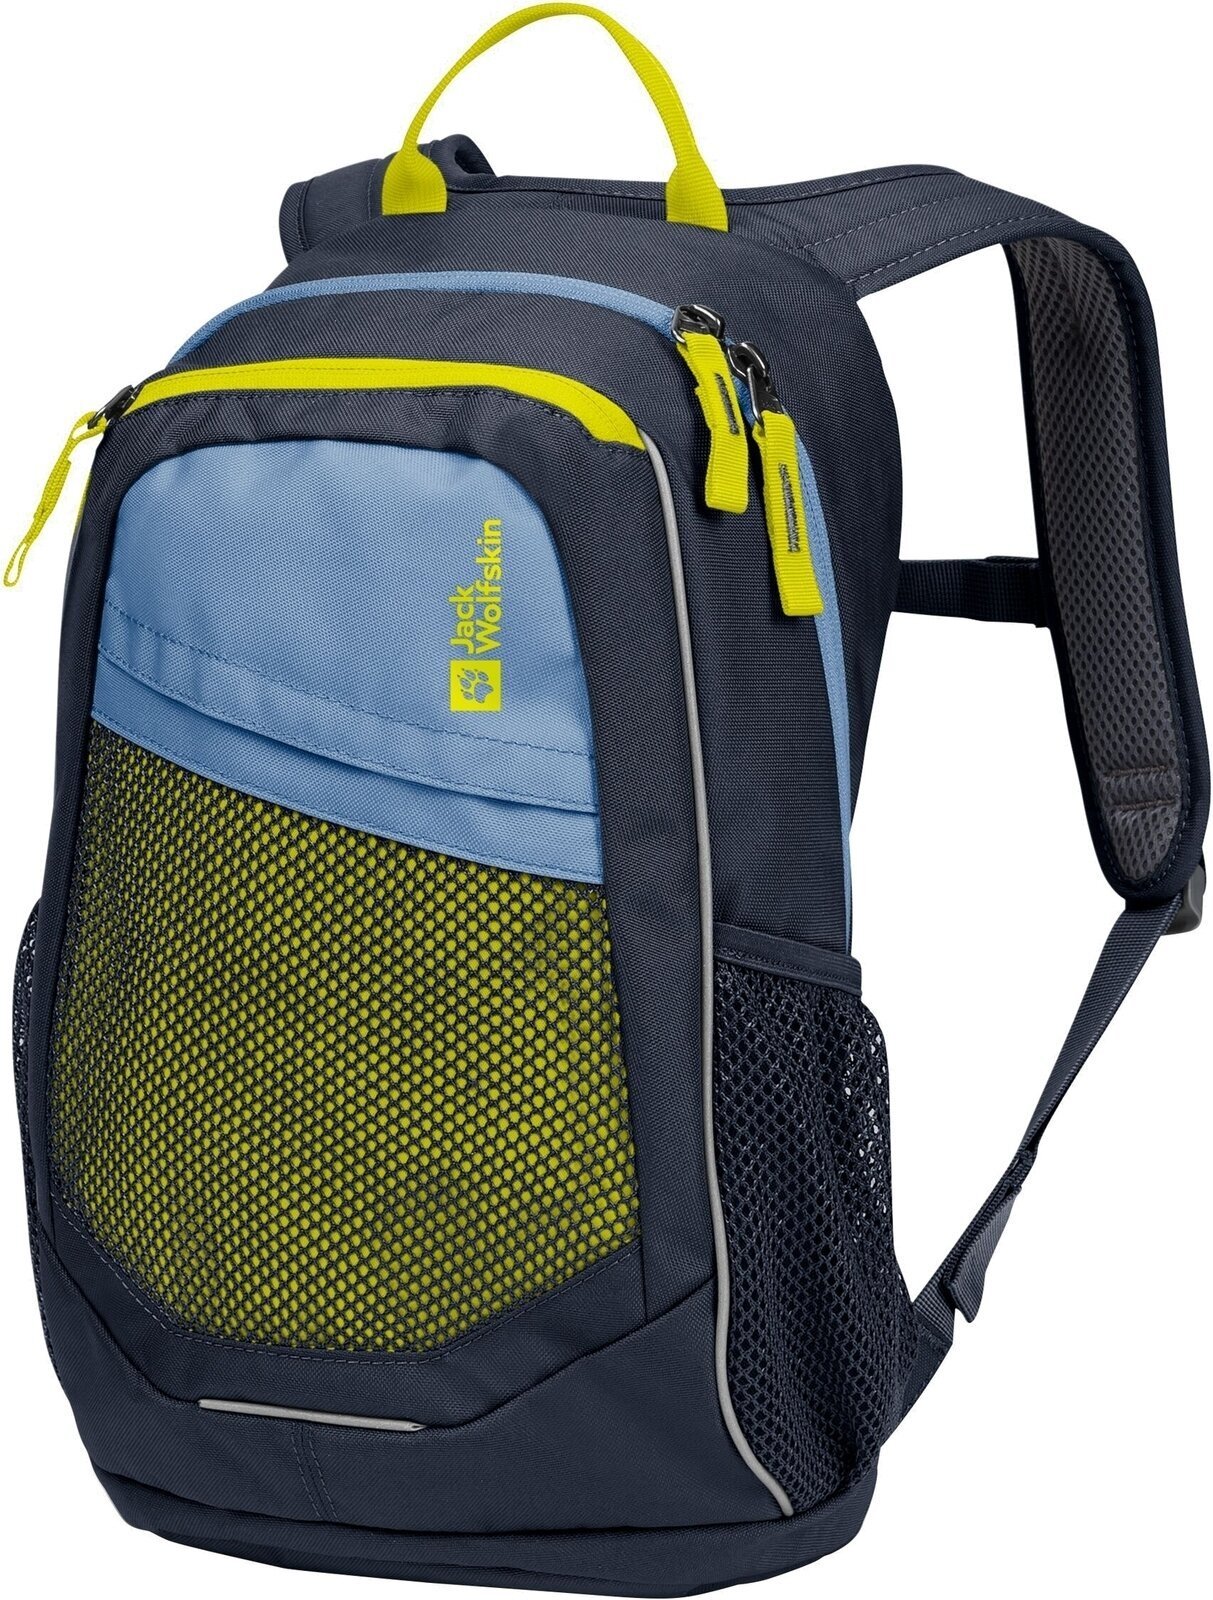 Outdoor Backpack Jack Wolfskin Track Jack Night Blue One Size Outdoor Backpack